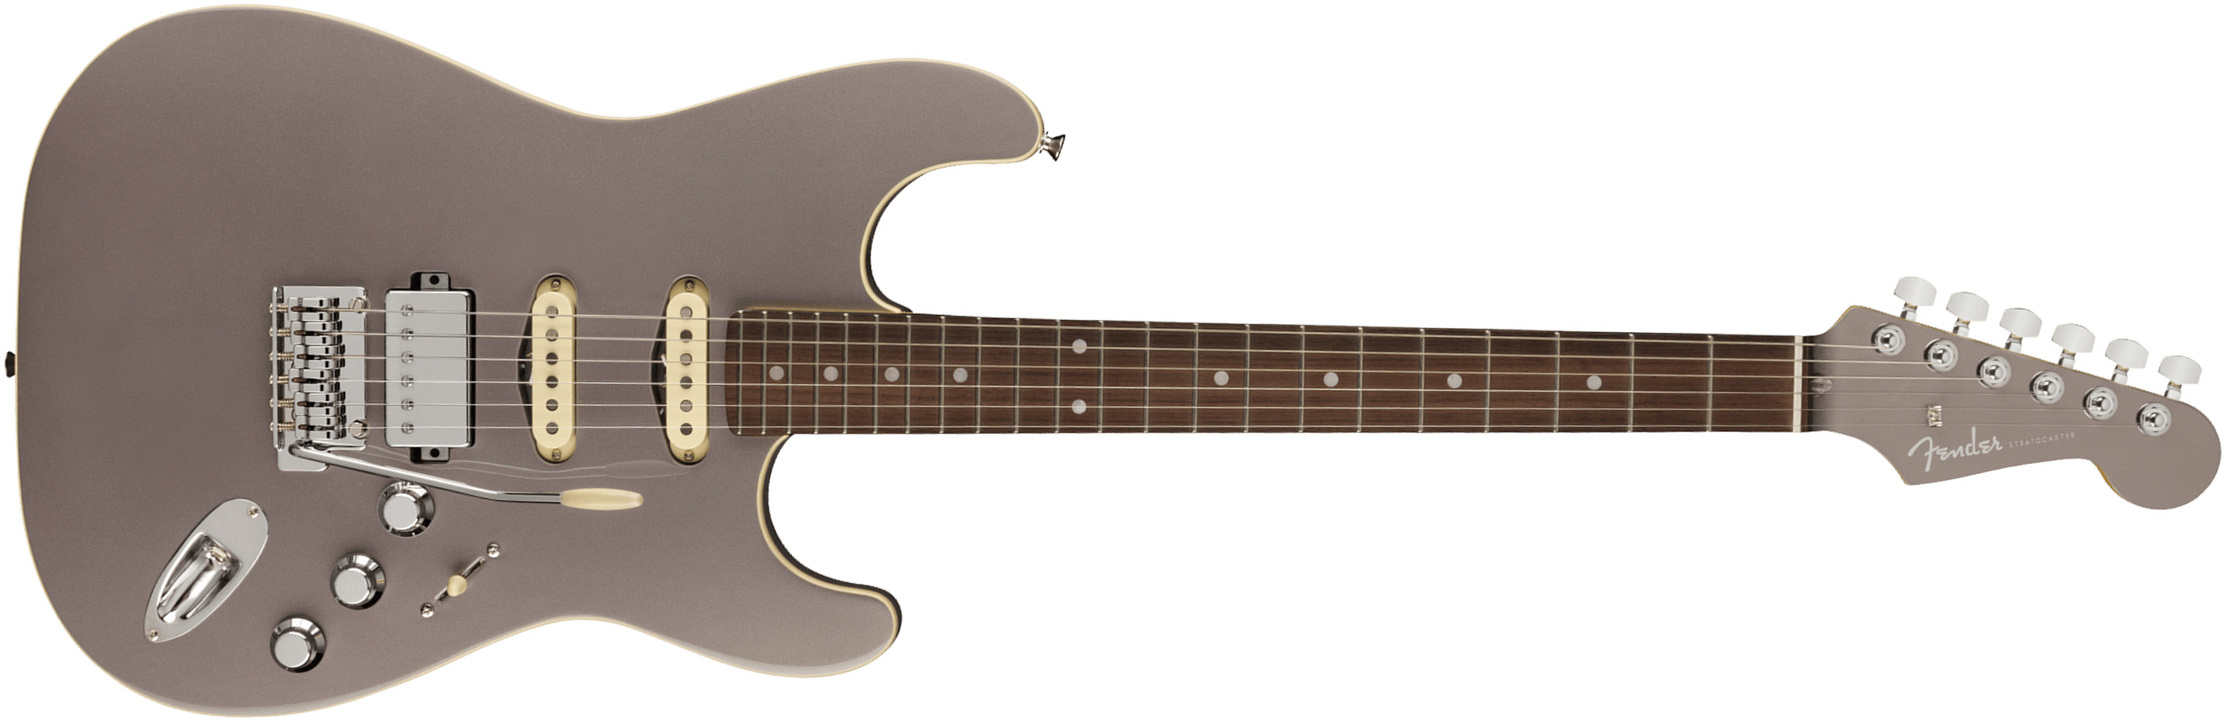 Fender Strat Aerodyne Special Jap Trem Hss Rw - Dolphin Gray Metallic - E-Gitarre in Str-Form - Main picture